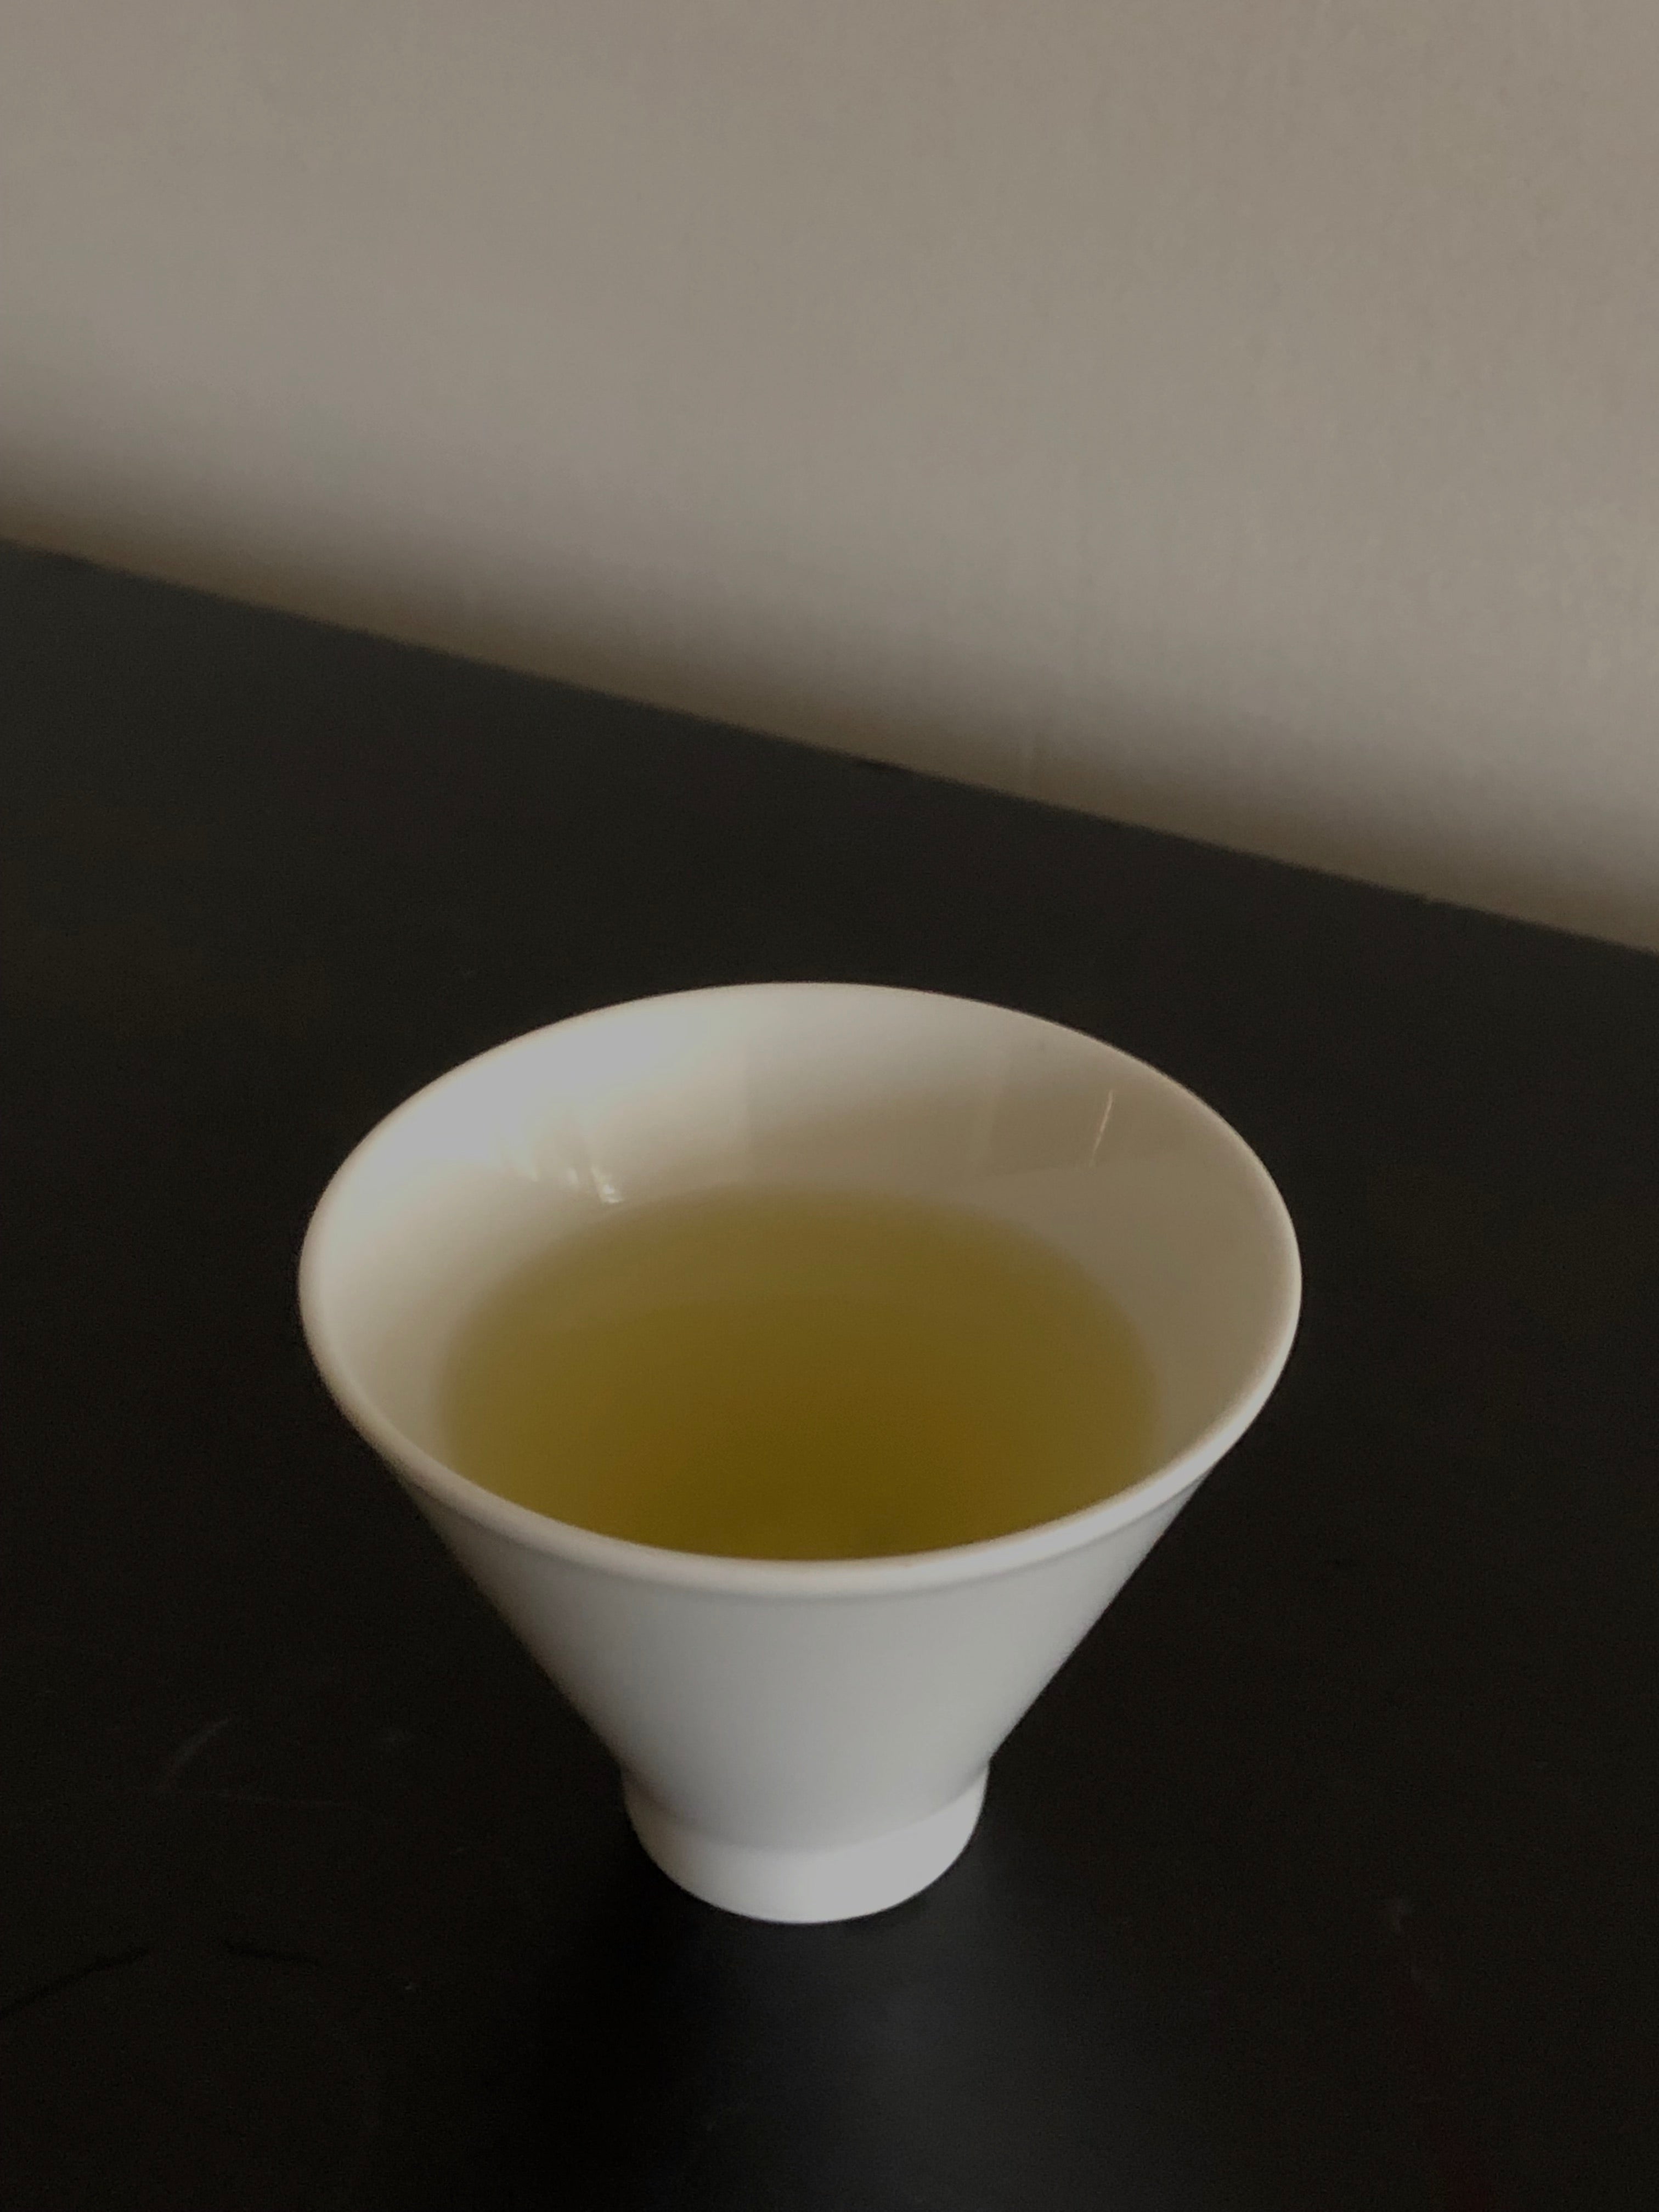 Kiwami gyokuro green tea loose leaf side view from Shibushi Kagoshima sold by Sabo Tea Australia – Sakamotoen